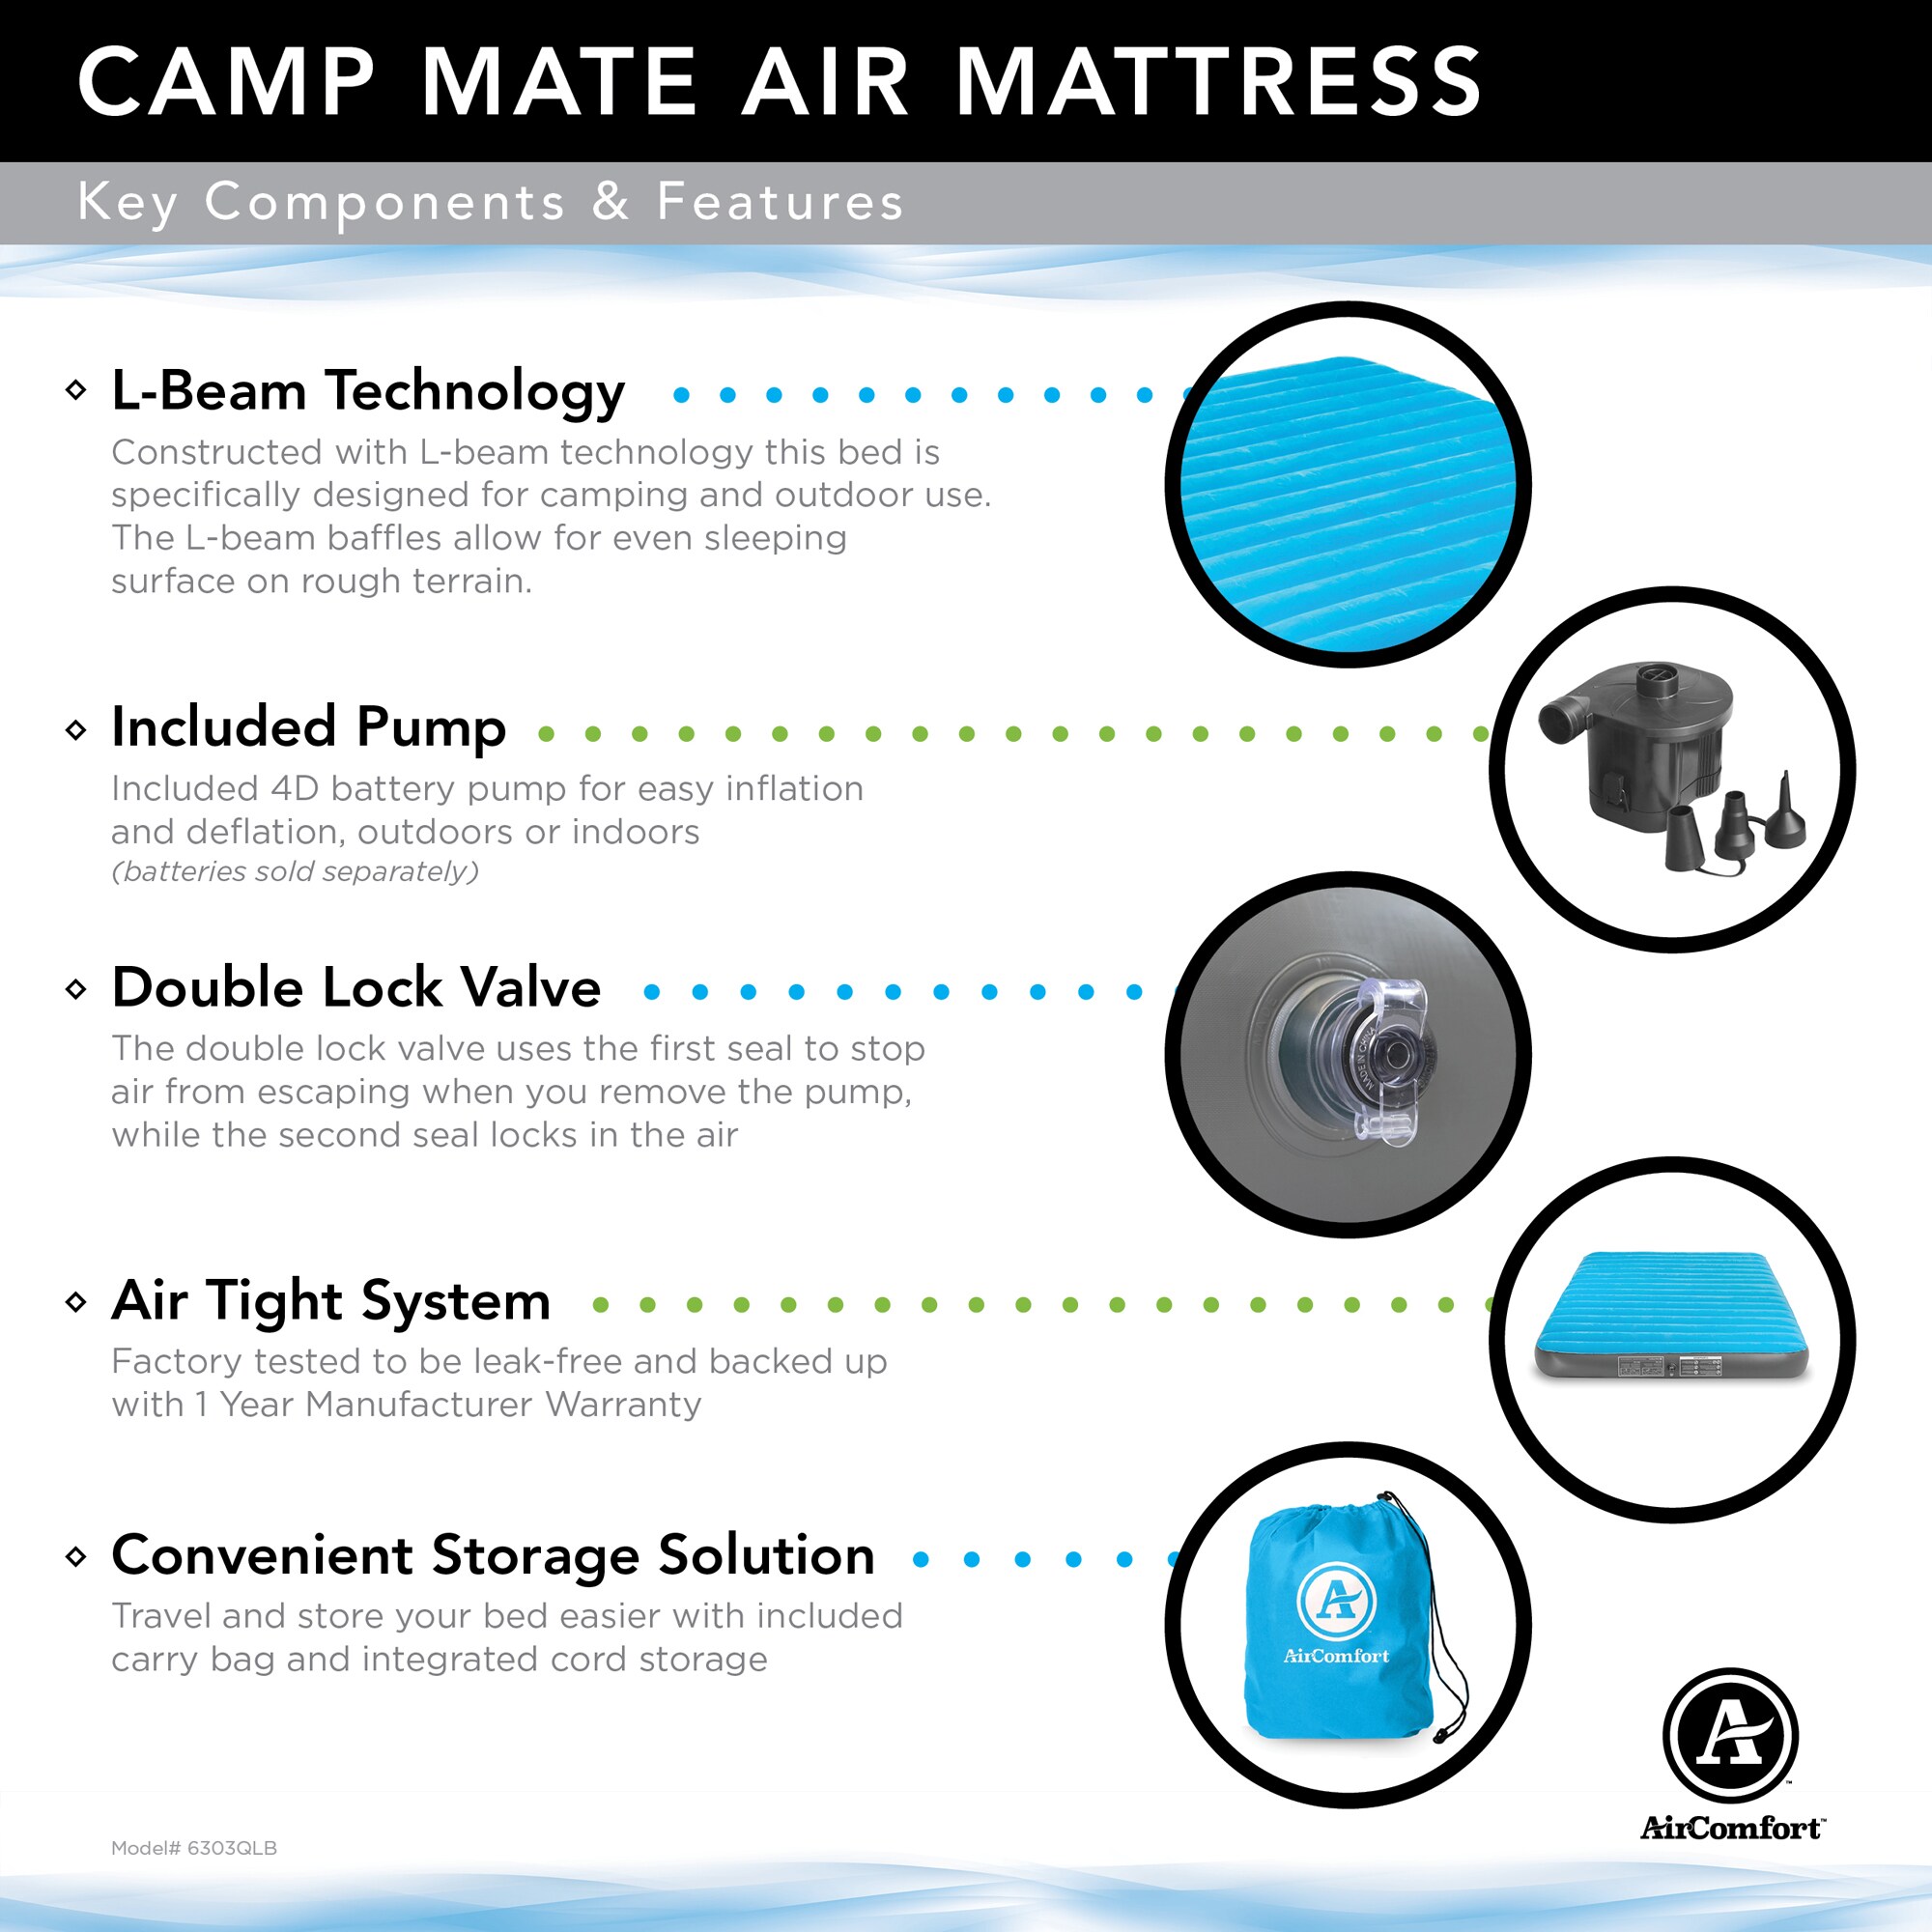 Air Comfort Camp mate PVC Queen Air Mattress at Lowes.com